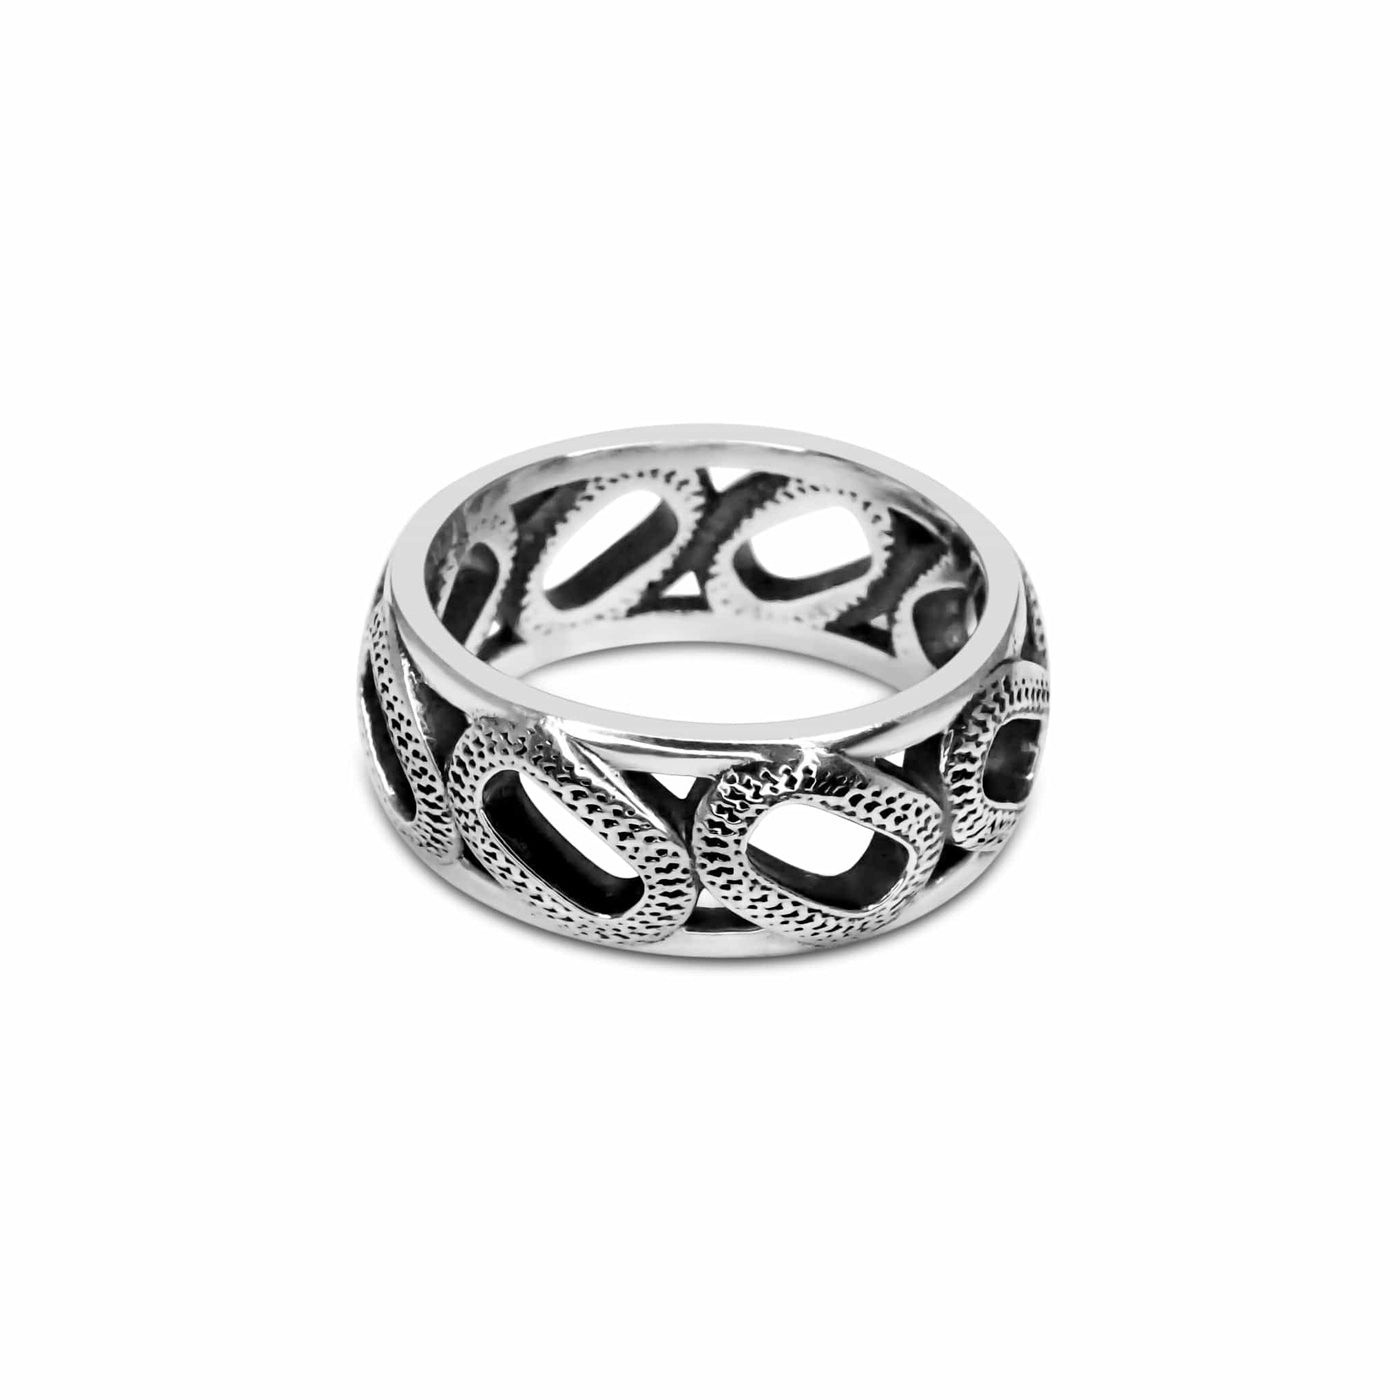 Corso - Girati Silver Rings for Men